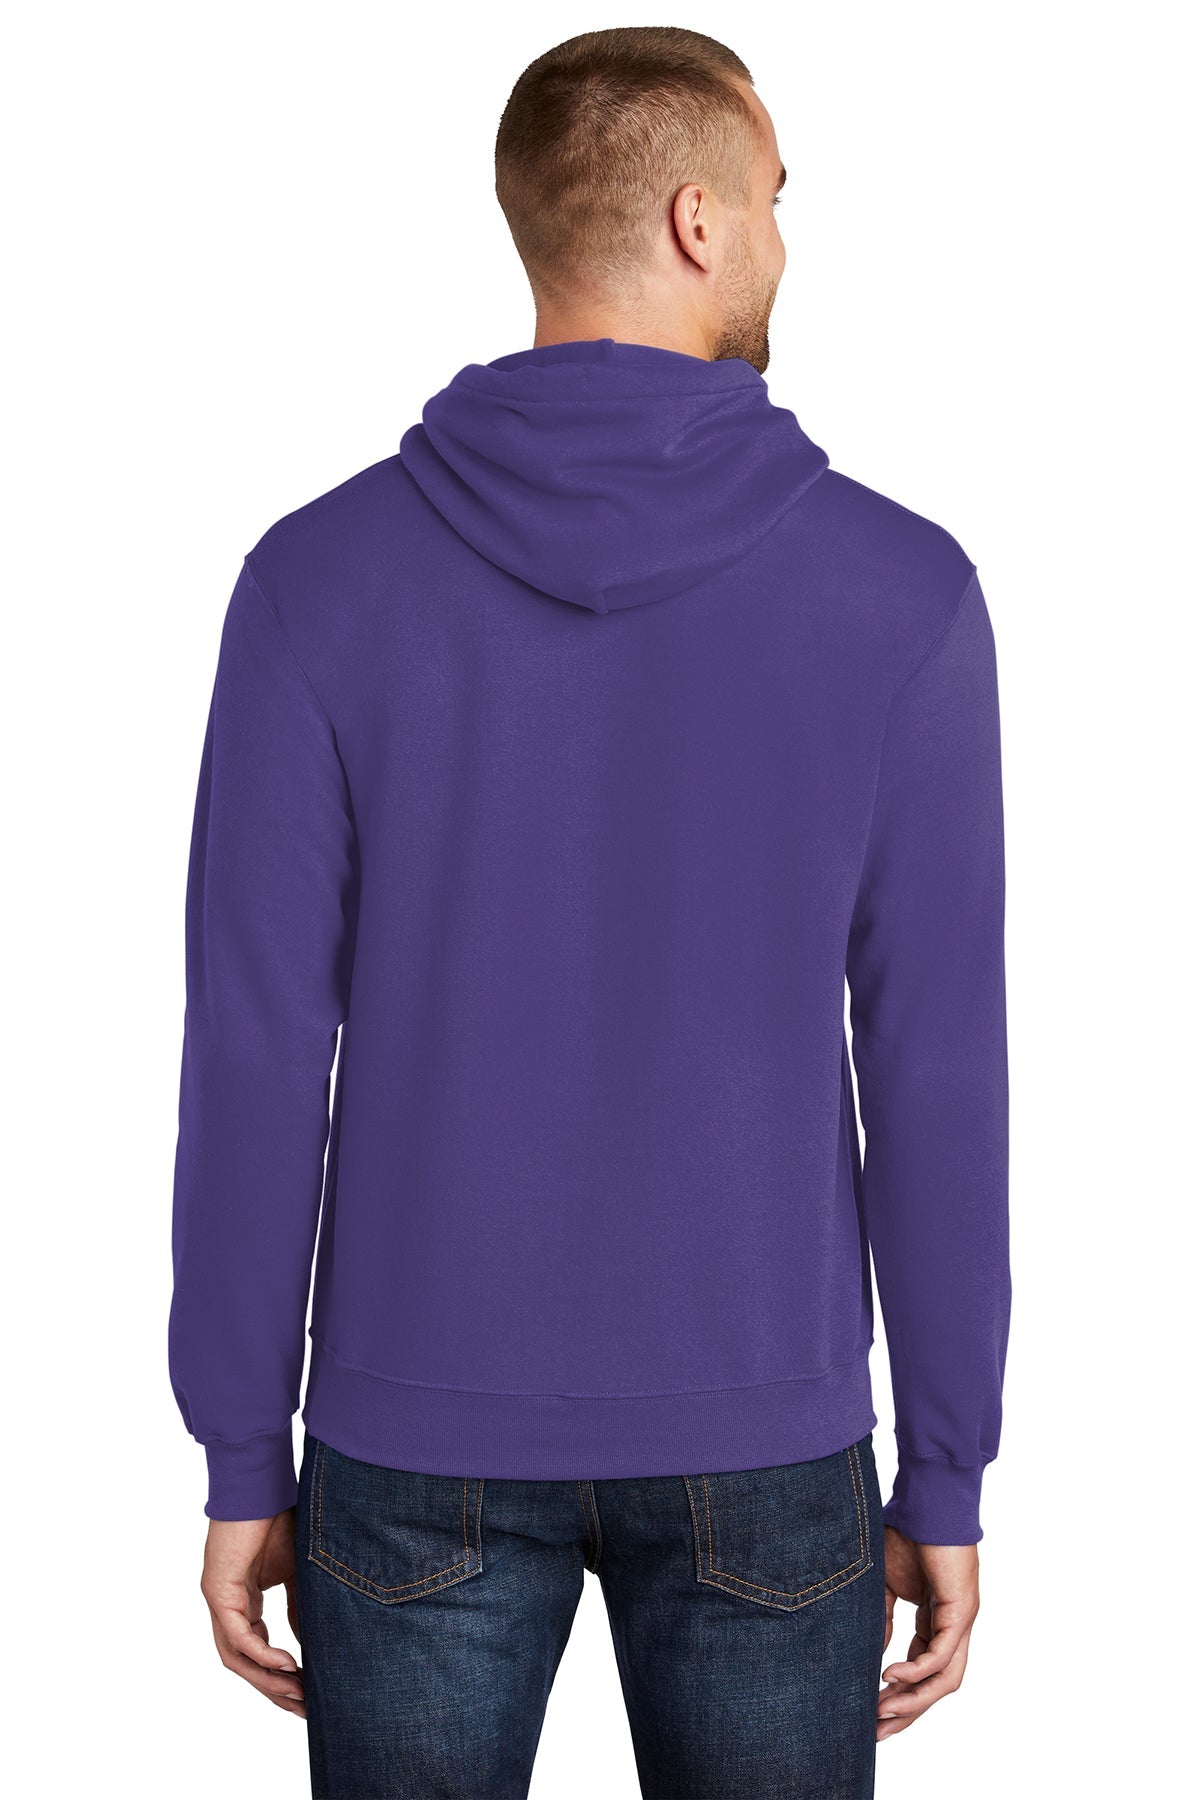 port & company_pc78h _purple_company_logo_sweatshirts